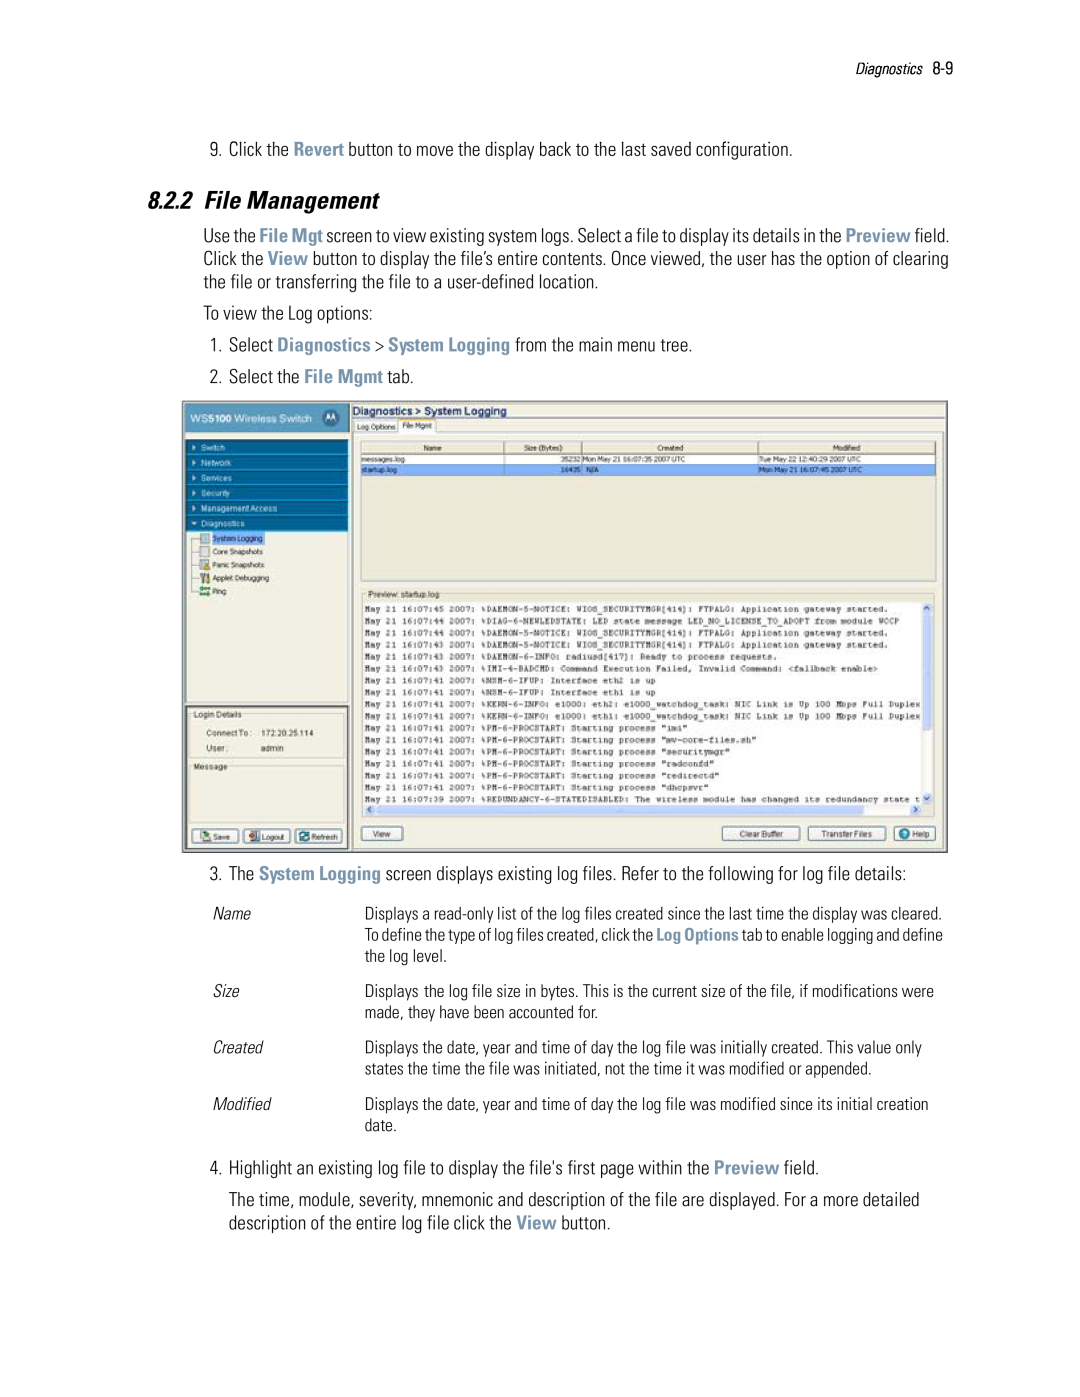 Motorola WS5100 manual 8.2.2File Management 